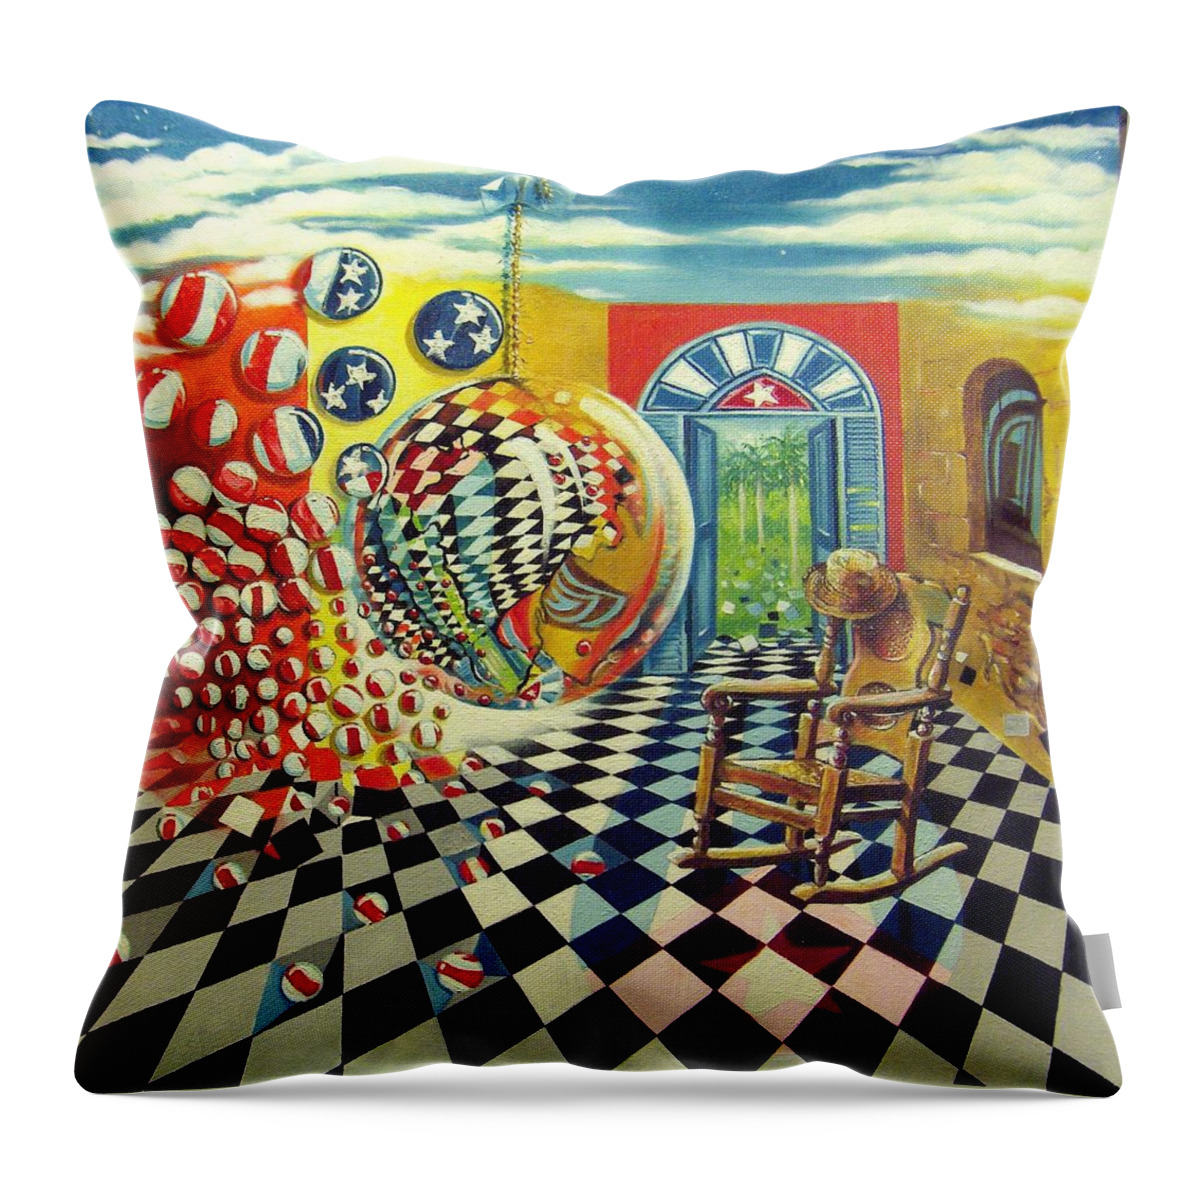 Spheres Throw Pillow featuring the painting Esperando ansiosamente la salida by Roger Calle